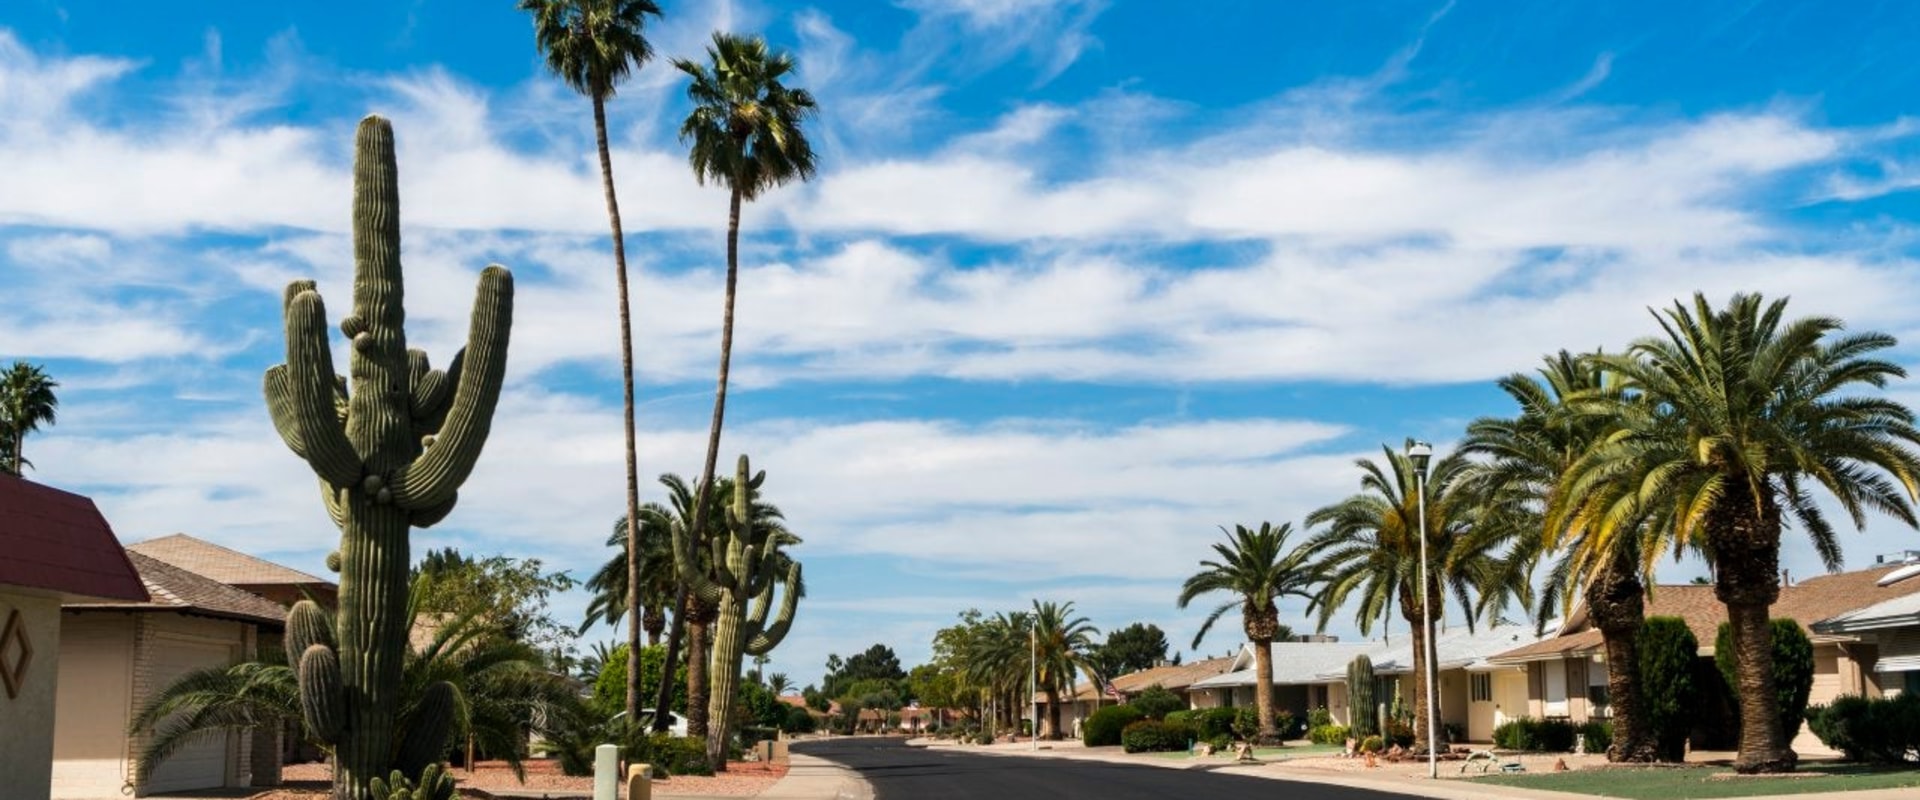 Factors Influencing Future Home Prices in Arizona